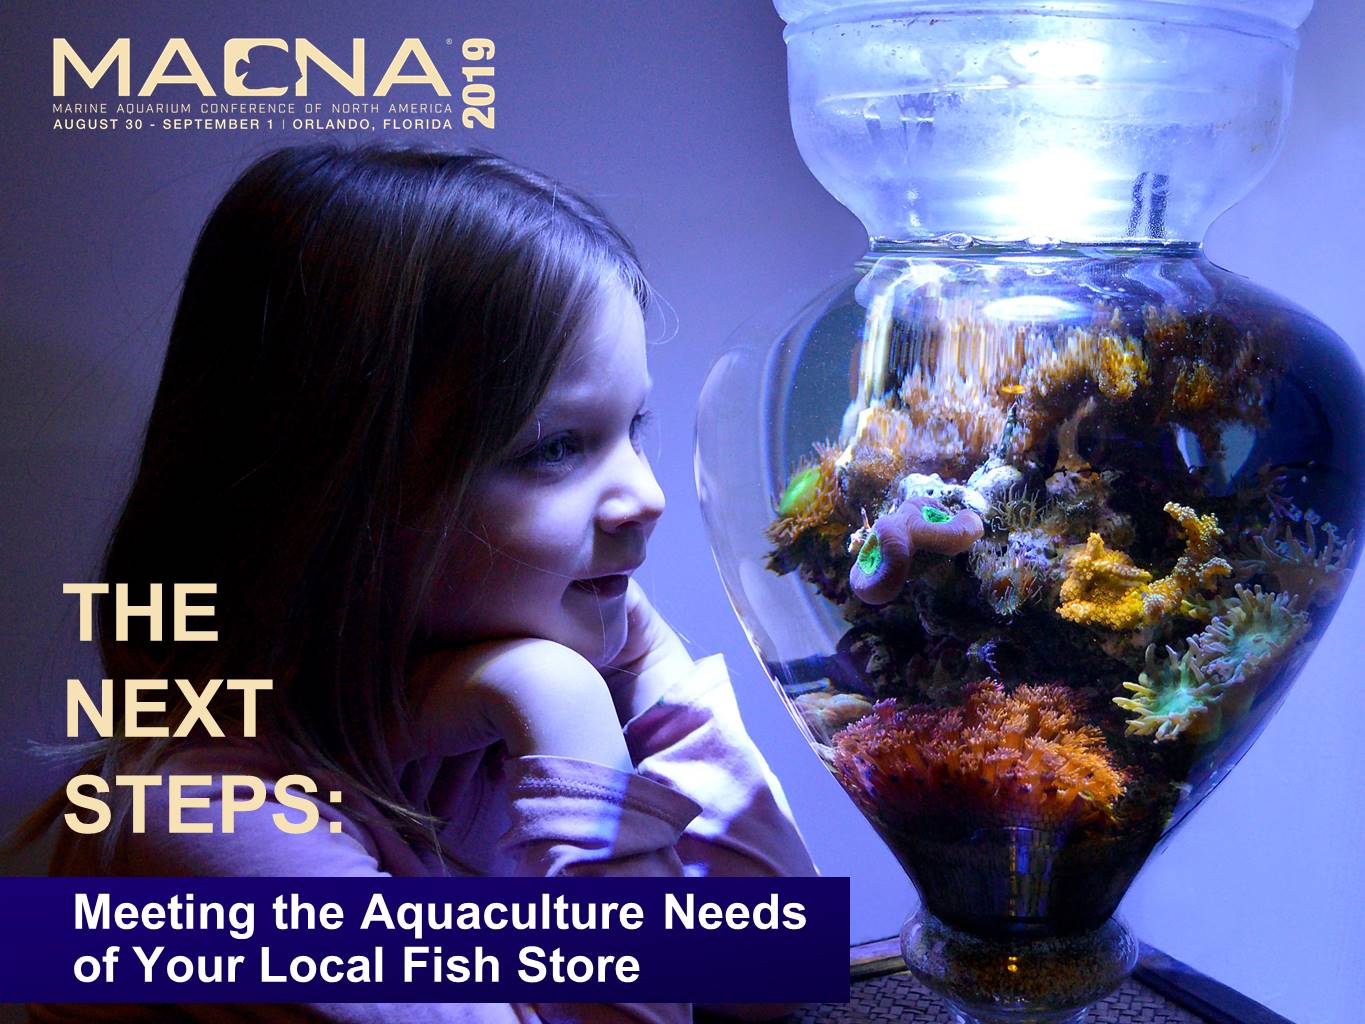 Watch Matt Pedersen present "The Next Steps: Meeting the Aquaculture Needs of Your Local Fish Store" from MACNA 2019.